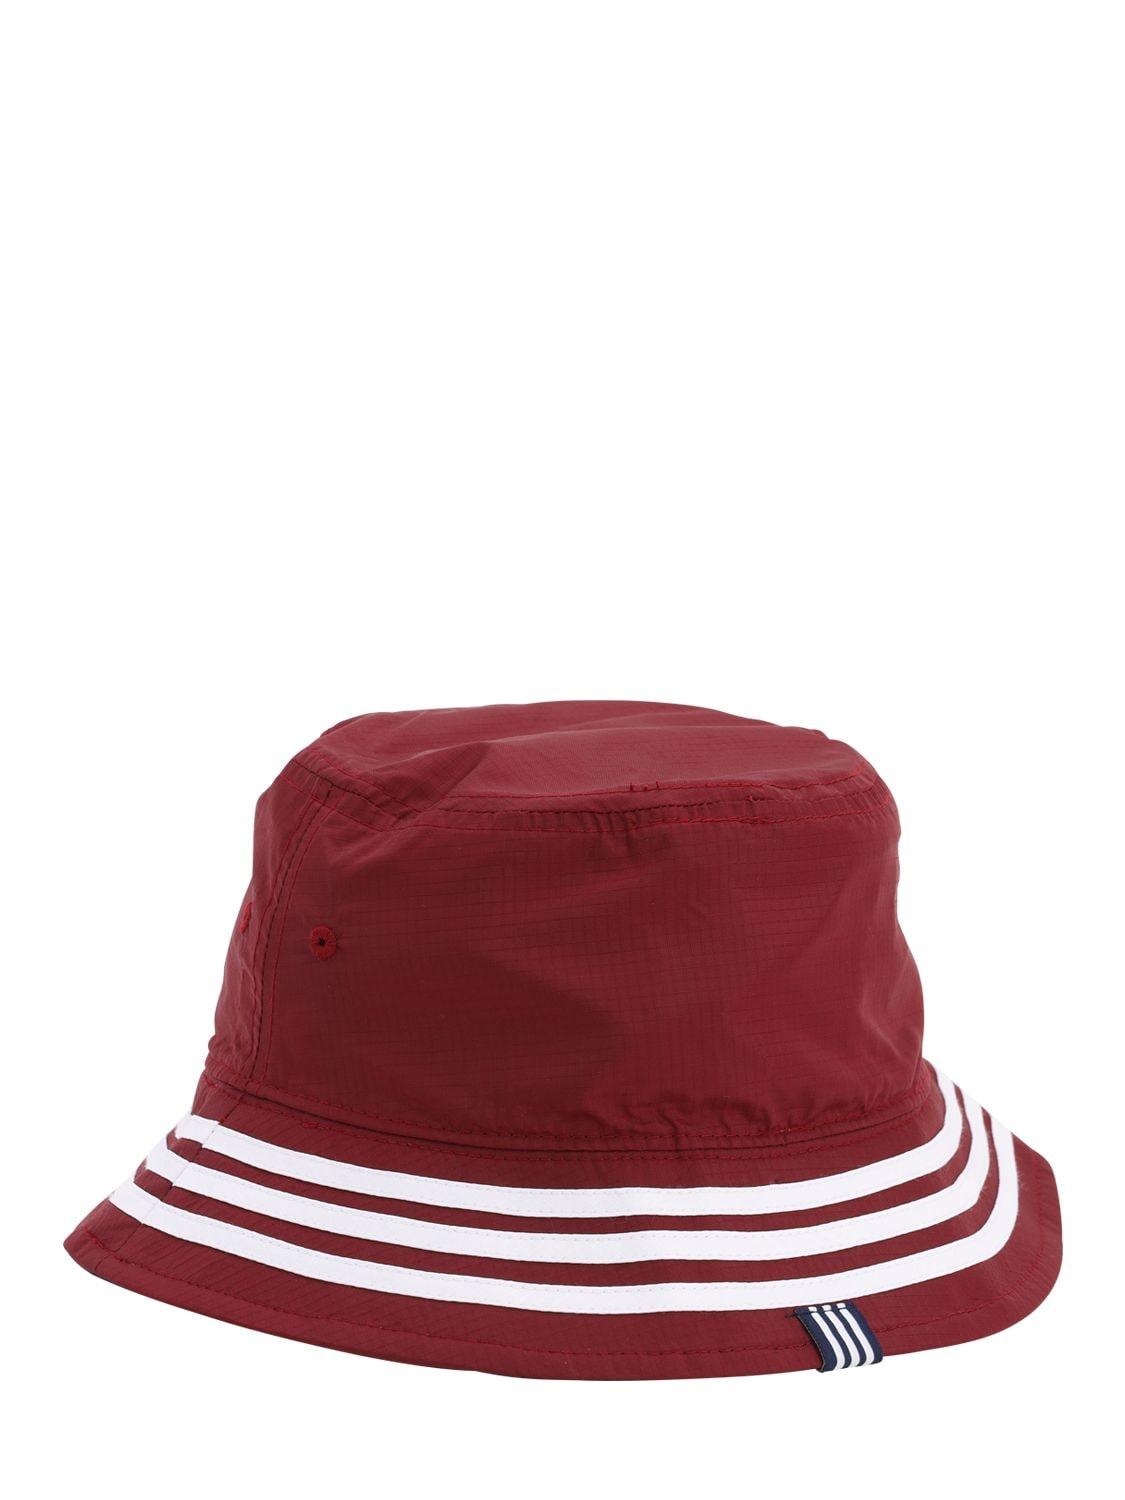 adidas Originals Reversible Trefoil Logo Bucket Hat in Red | Lyst